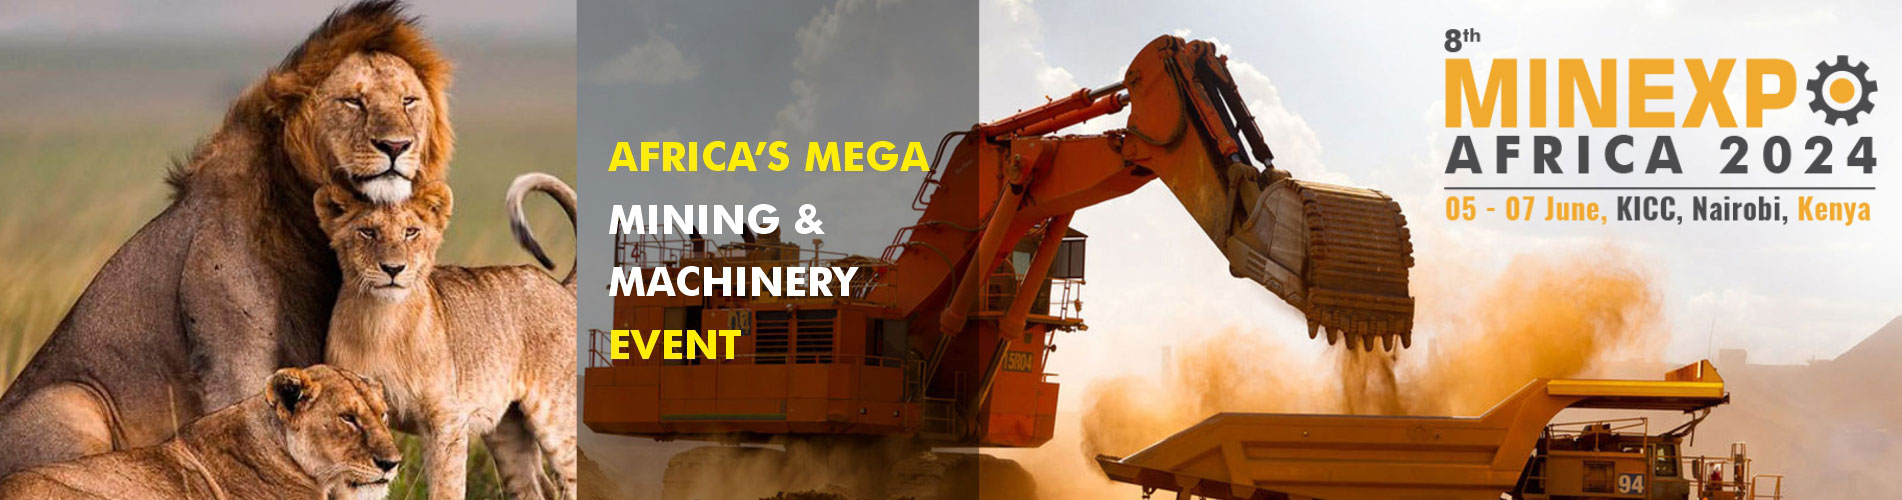 Minexpo Kenya 2024 - International Mining & Machinery Show Africa